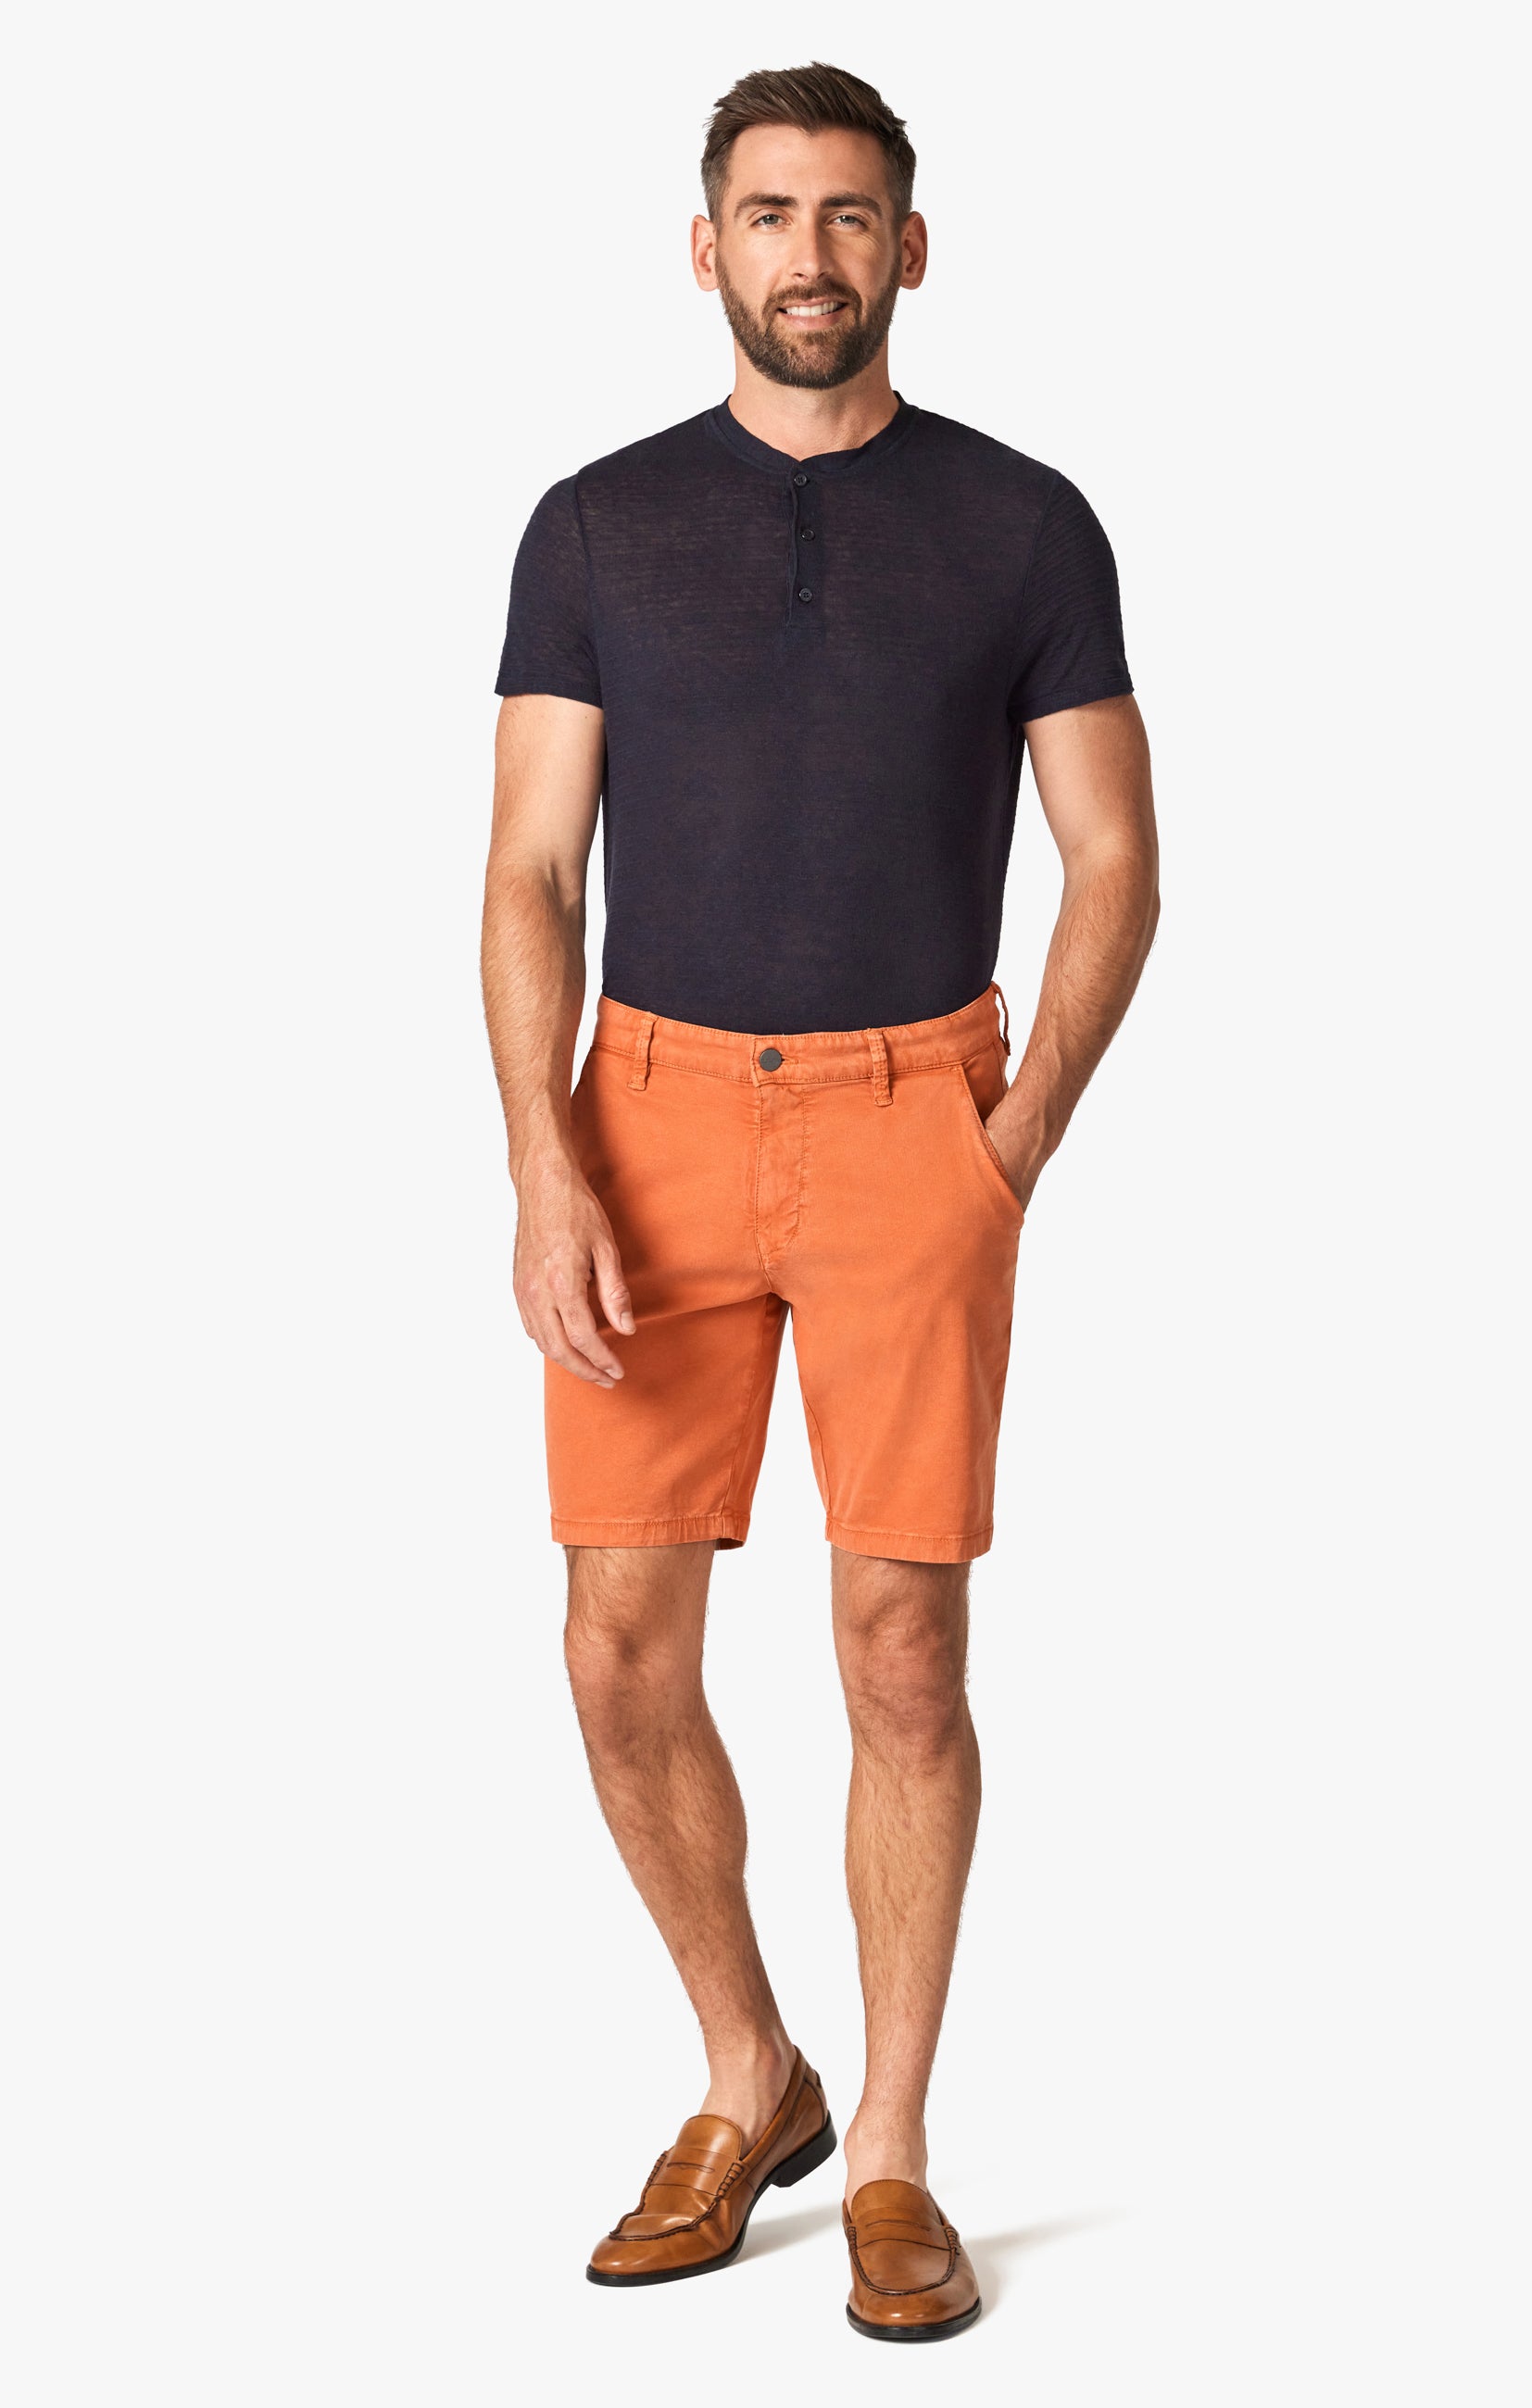 Arizona Shorts In Orange Rust Soft Touch Image 1